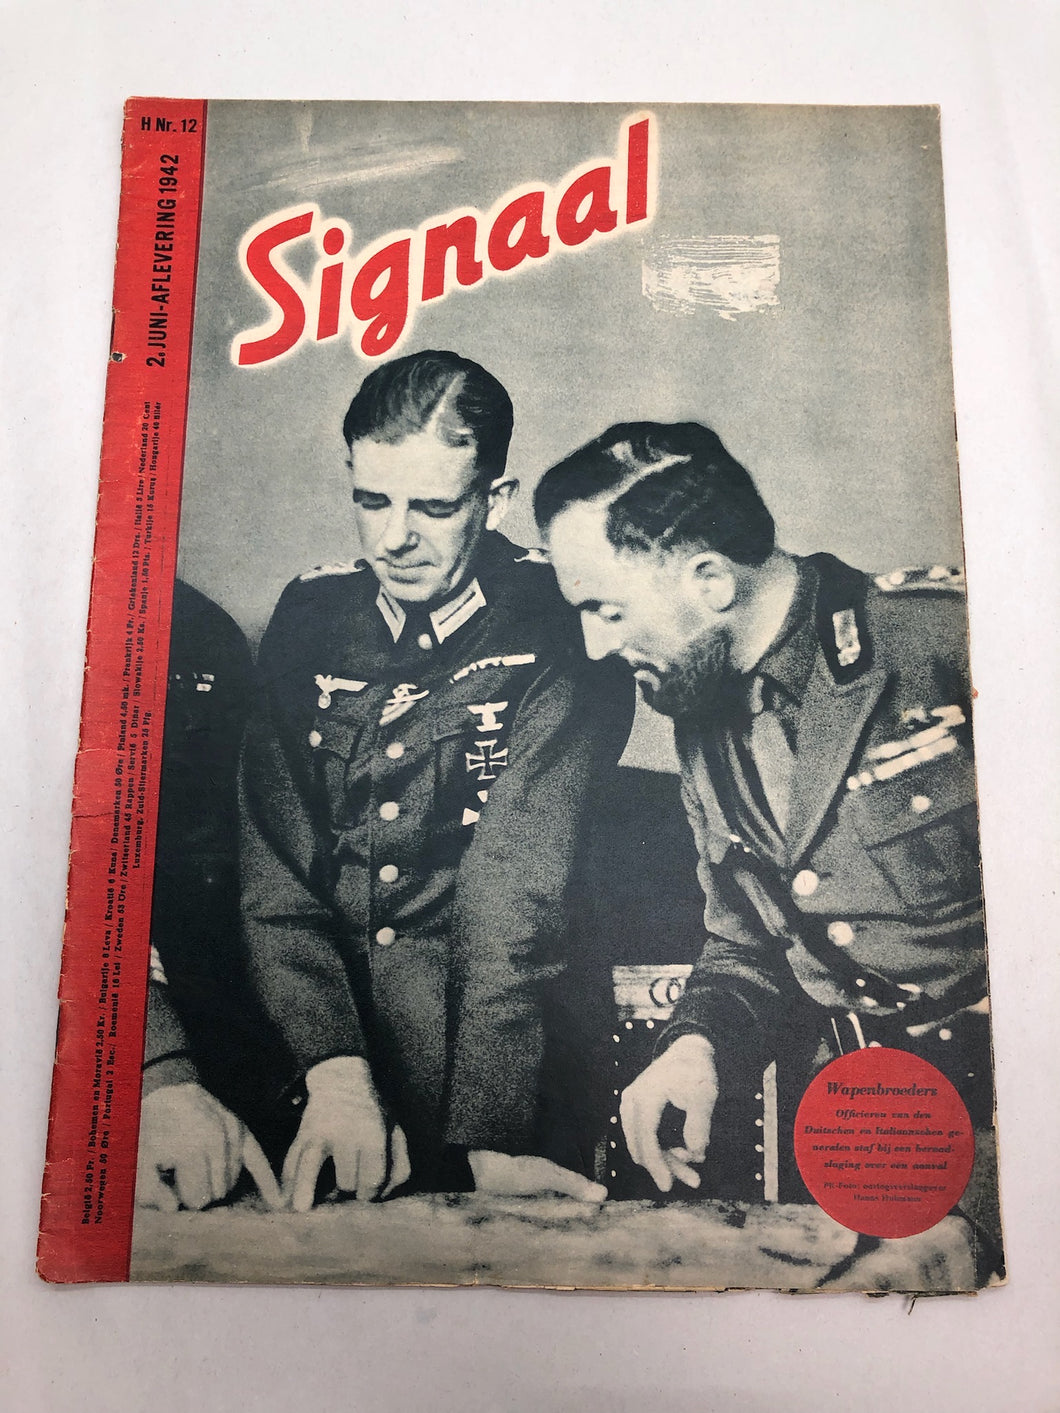 Original Dutch Language WW2 Propaganda Signaal Magazine - No.12 1942